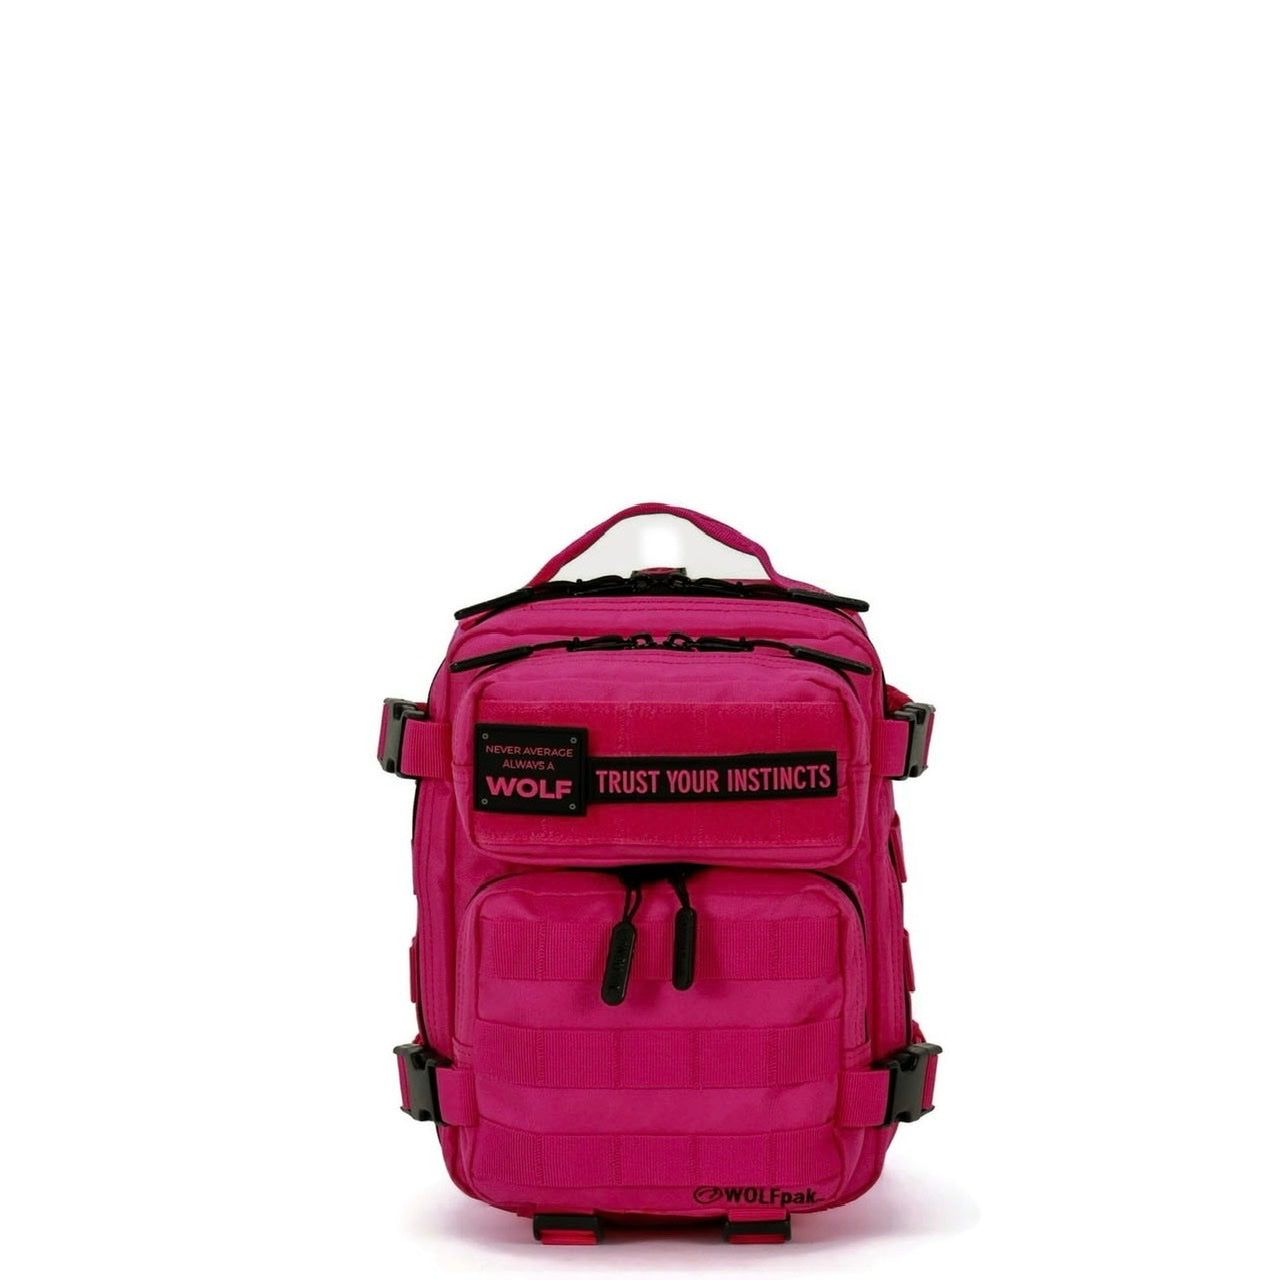 9L Backpack Mini Voodoo Pink